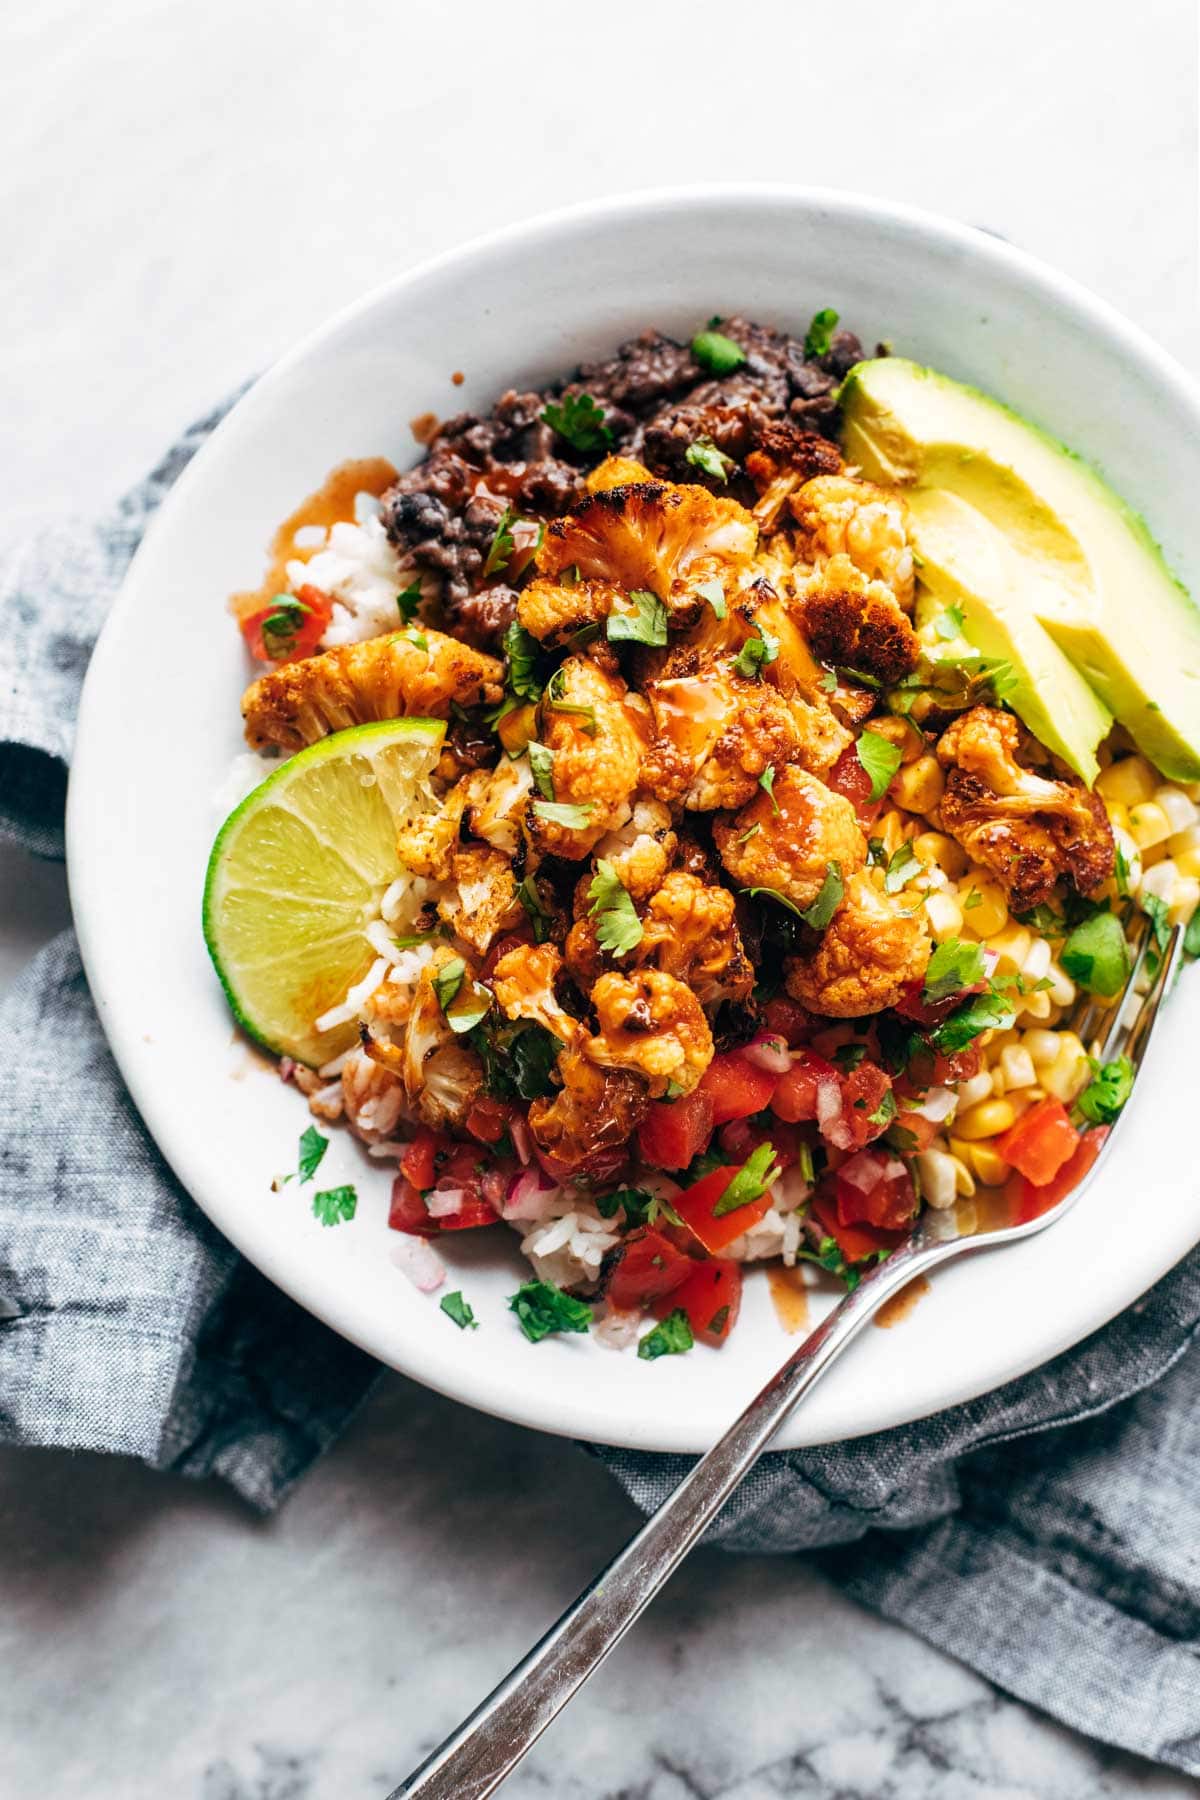 Lighter family dinner ideas for spring: Roasted cauliflower burrito bowls | Pinch of Yum